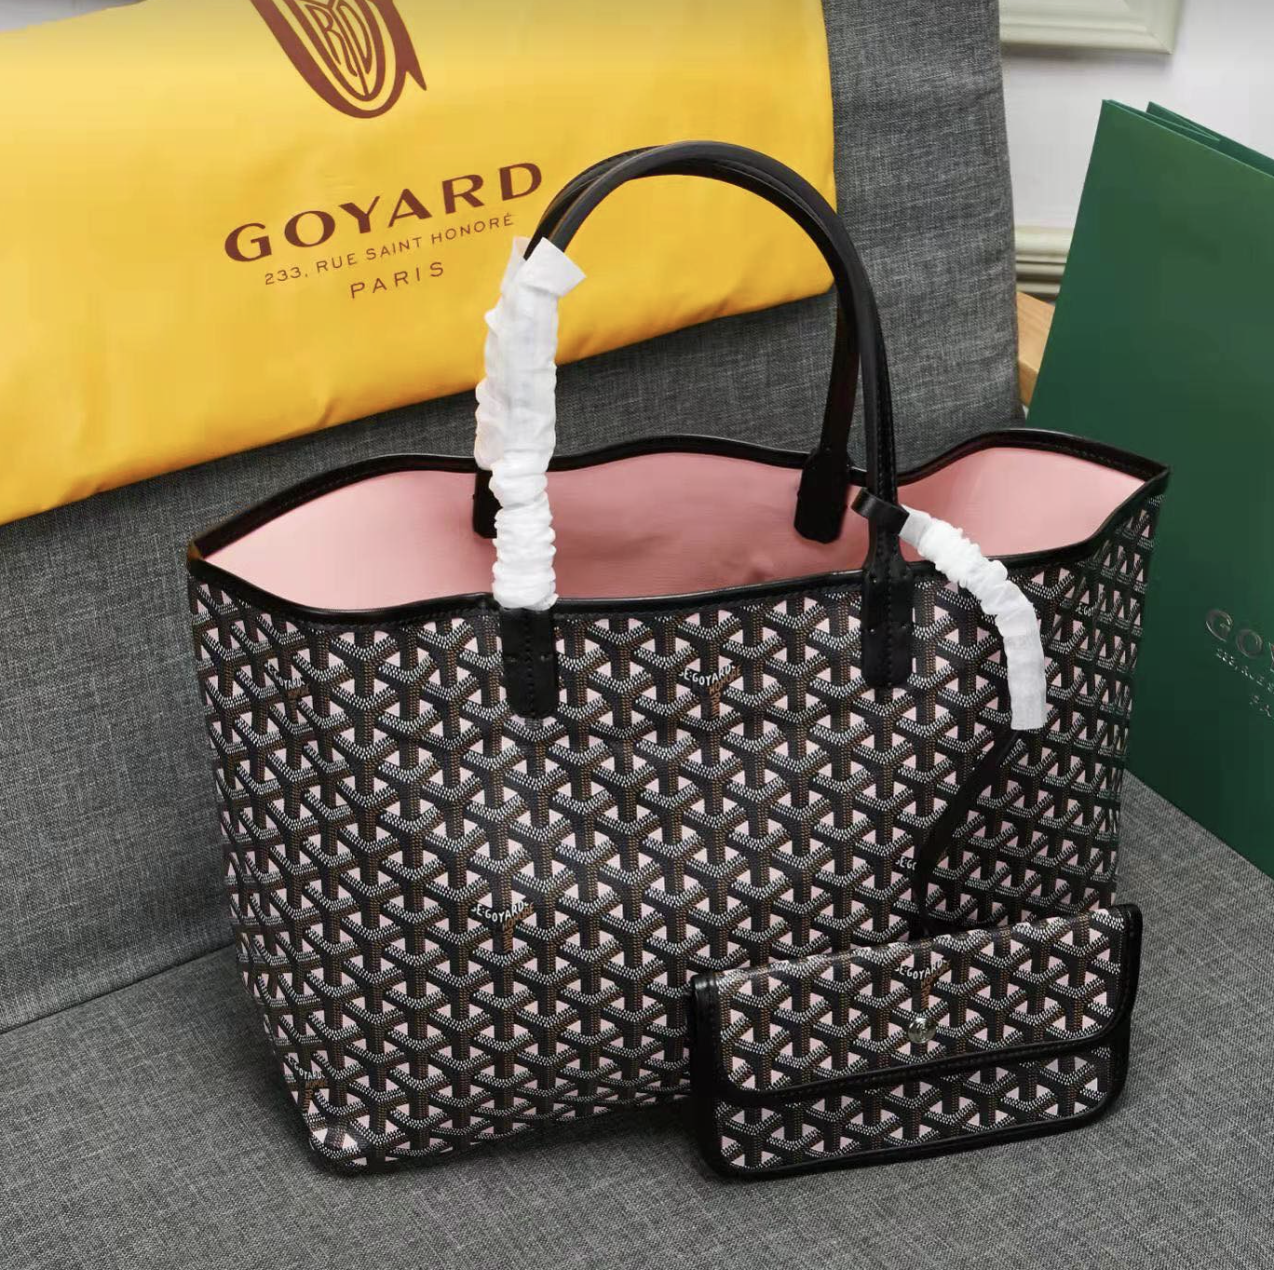 New Goyard Rouette Bag Part Deux July 2023 - #GoyardGangGabbing +